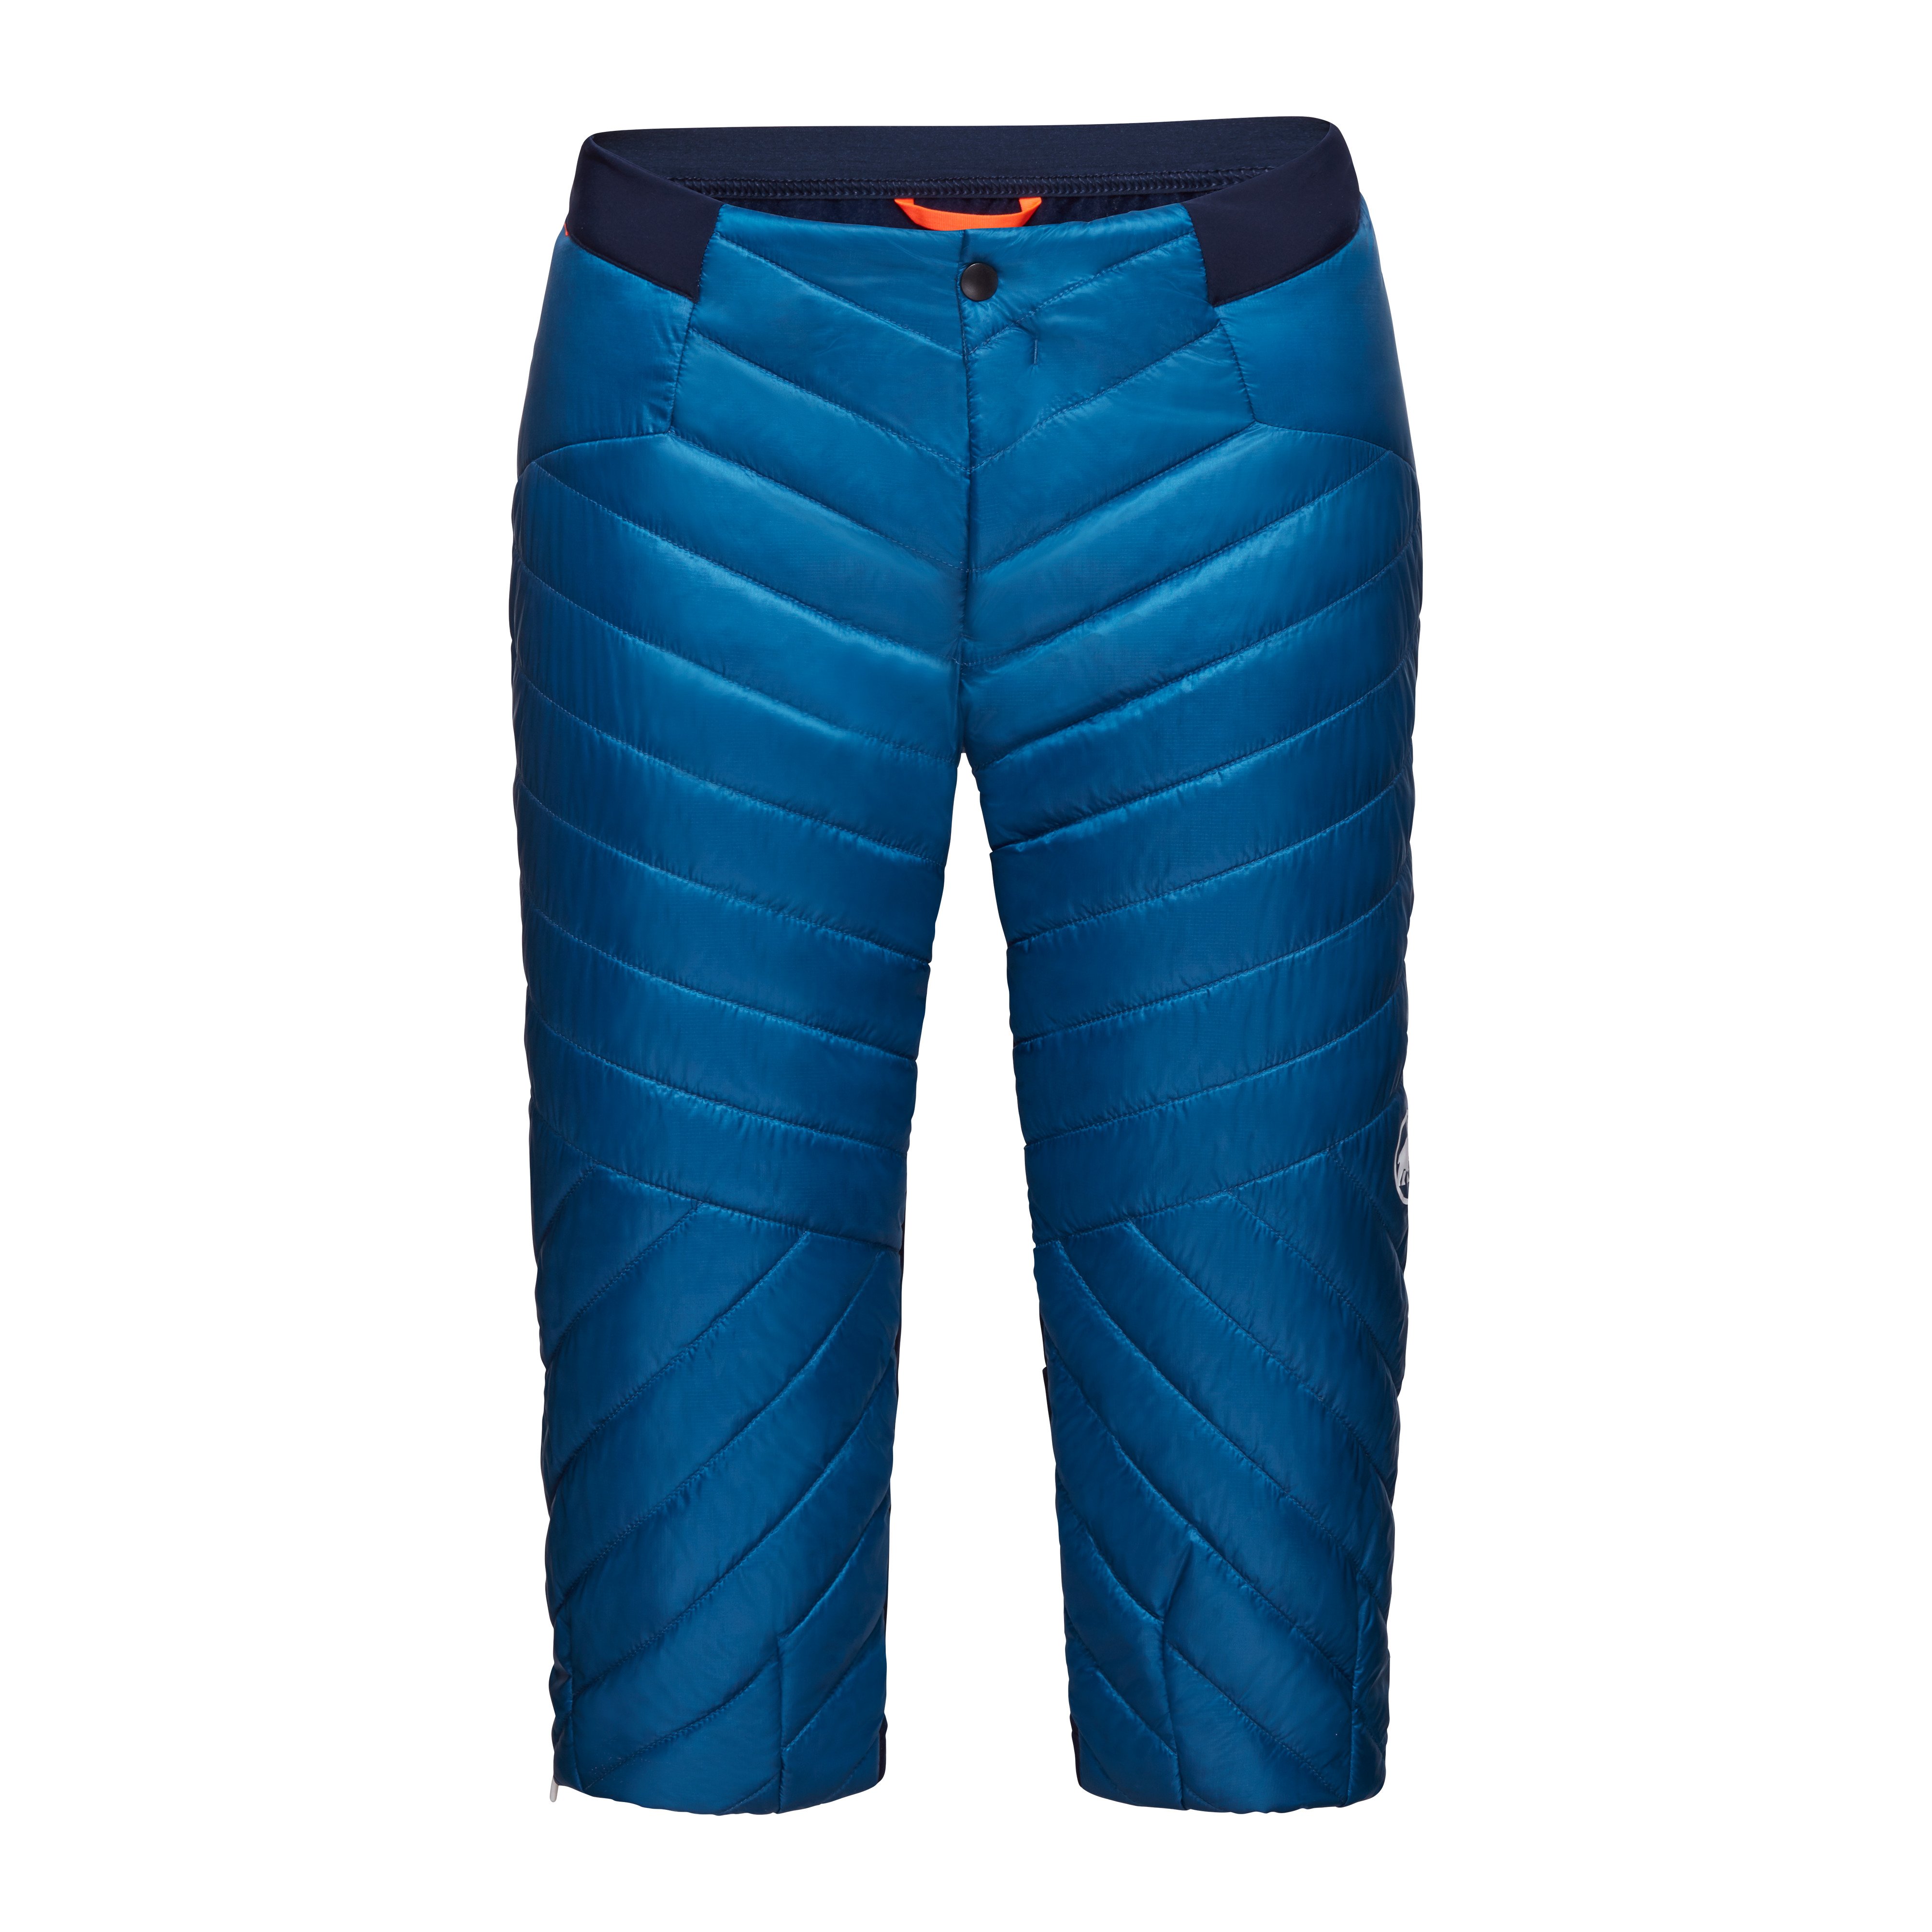 Aenergy IN Shorts Men - deep ice-marine, XL product image